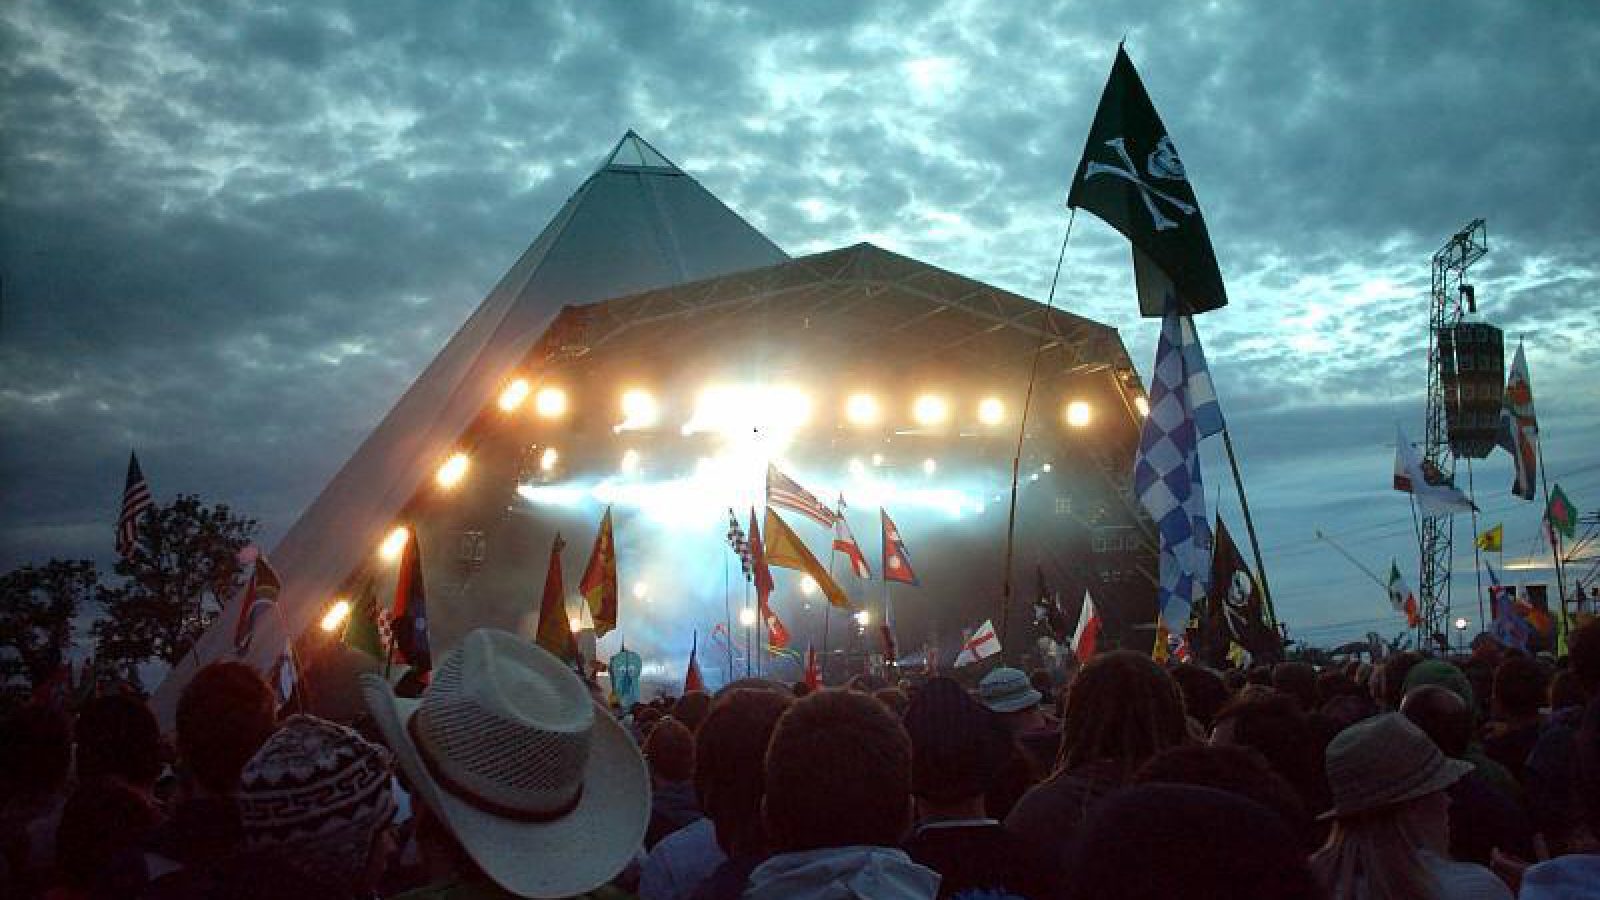 Pyramid Stage